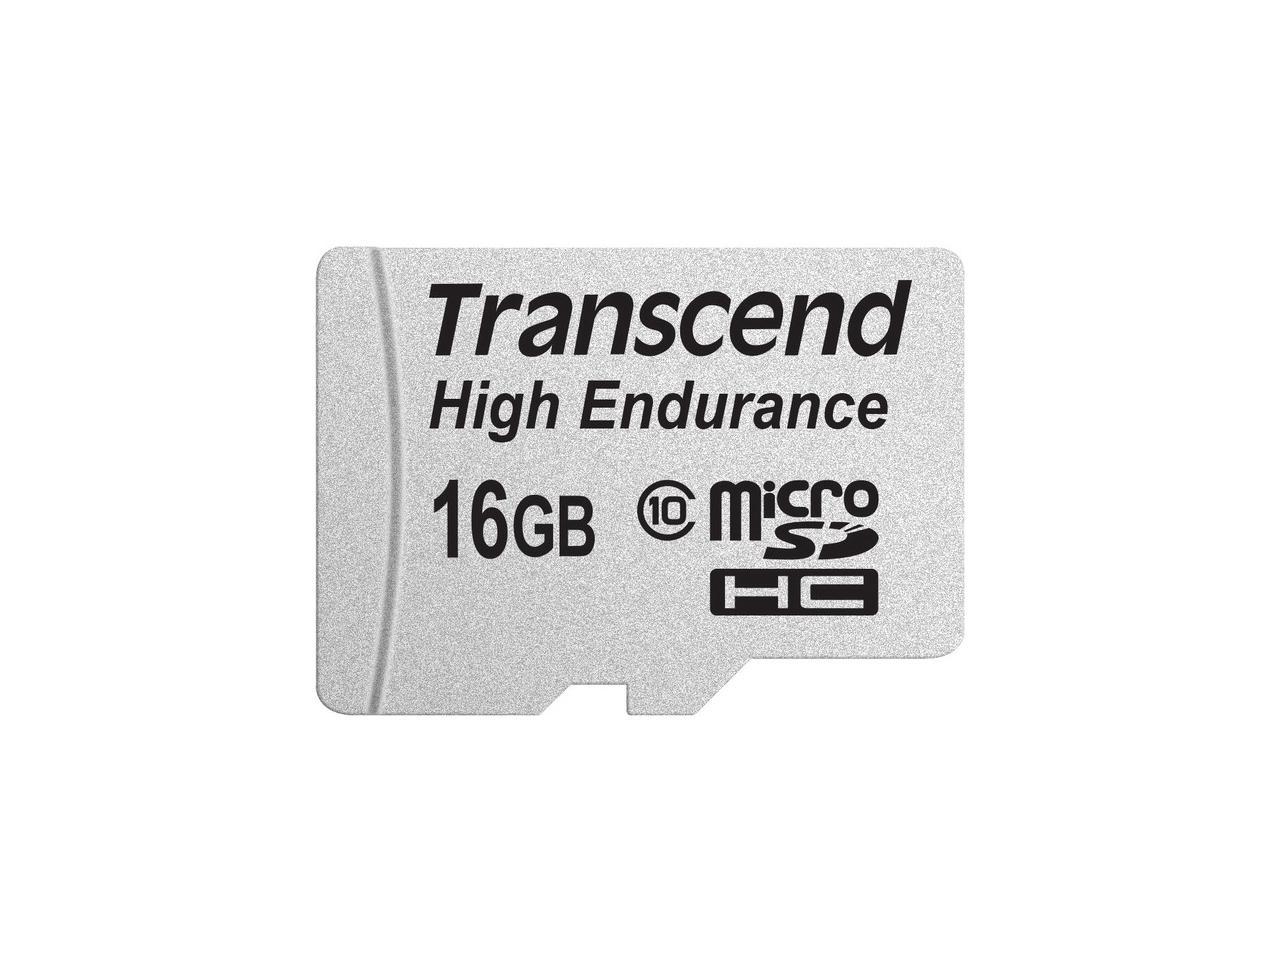 Mammoth repulsion Uegnet 16GB Transcend High Endurance MicroSDHC Card CL10 w/SD Adapter - Newegg.com